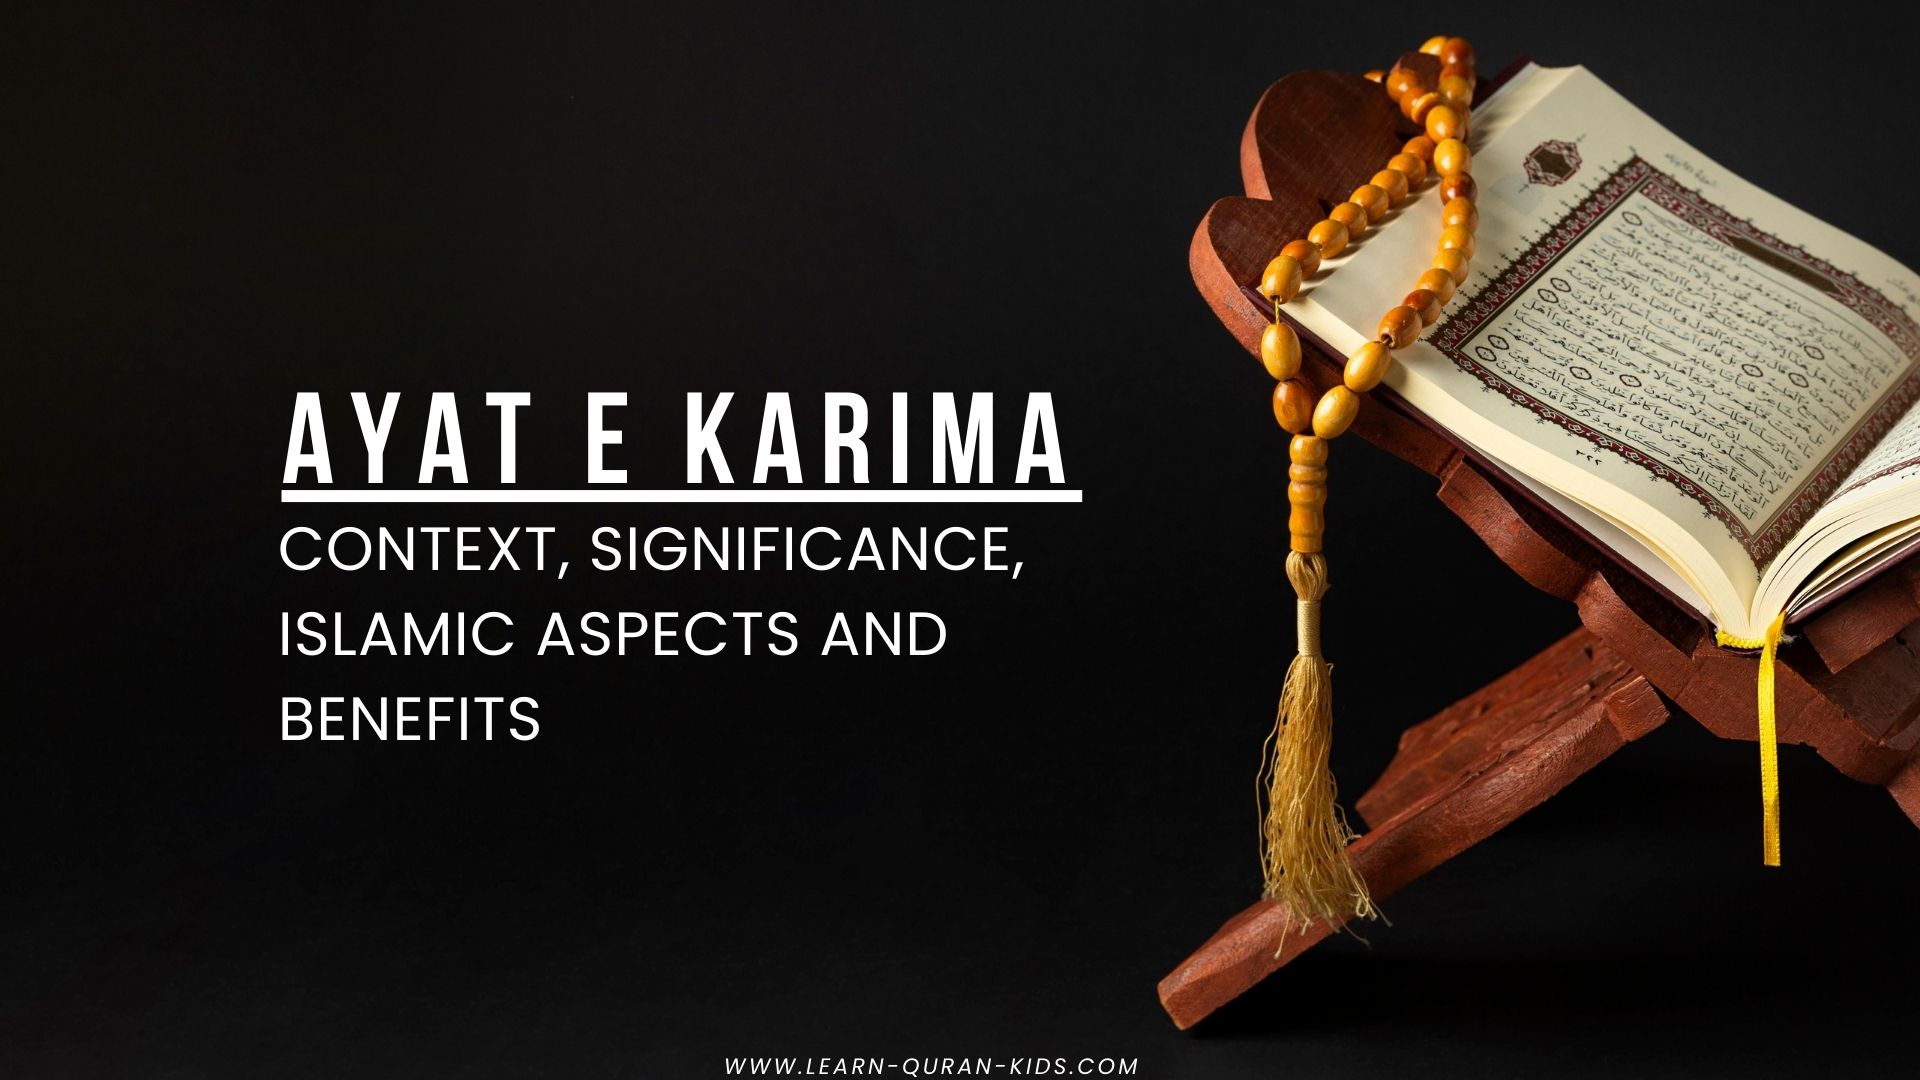 Ayat e Karima Context, Significance, Islamic Aspects and Benefits